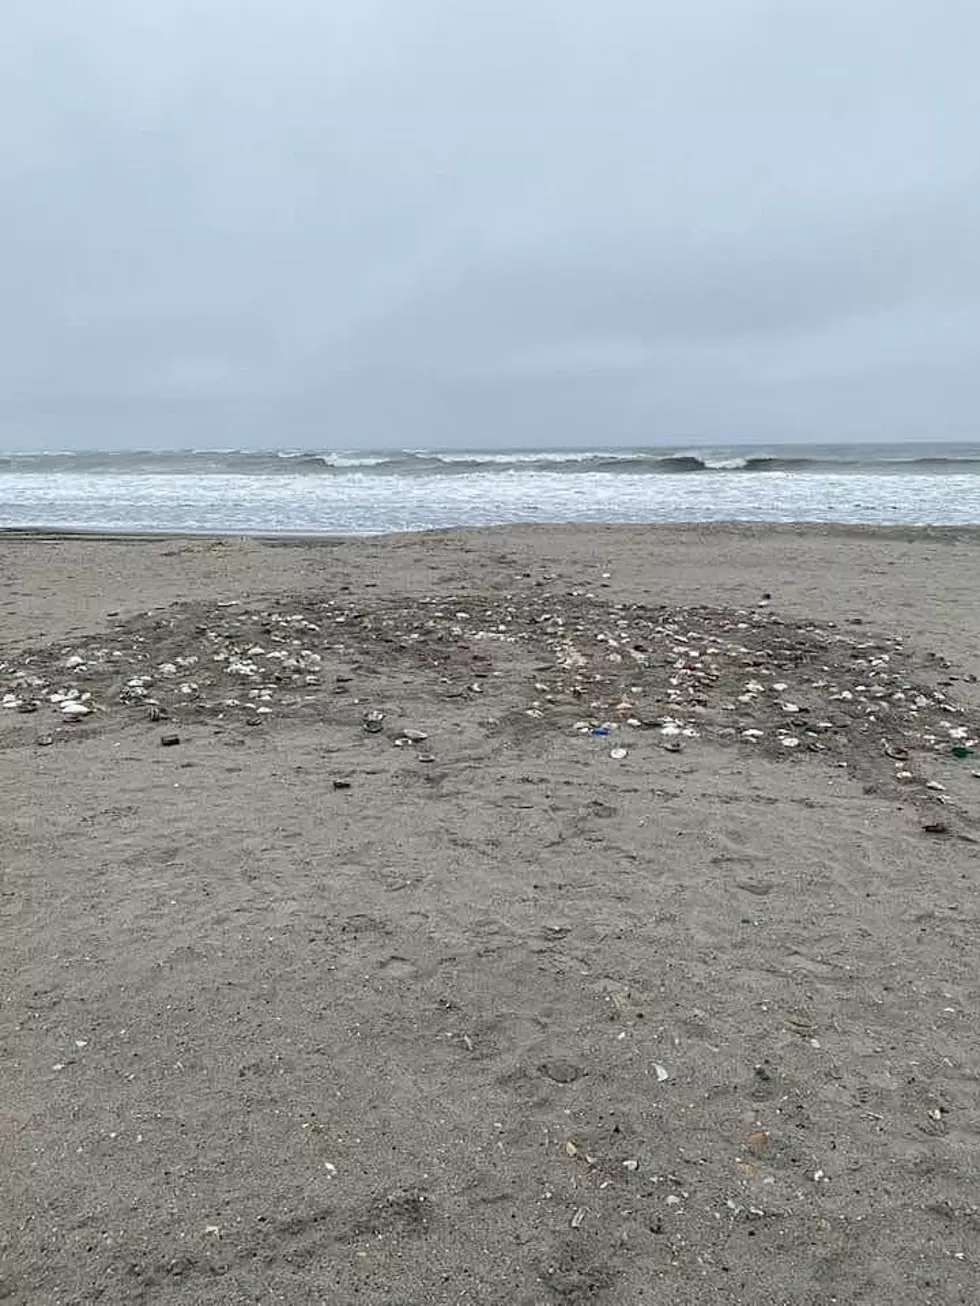 Jersey Shore Town Not Deterred After Vandals Ruin Shell Art